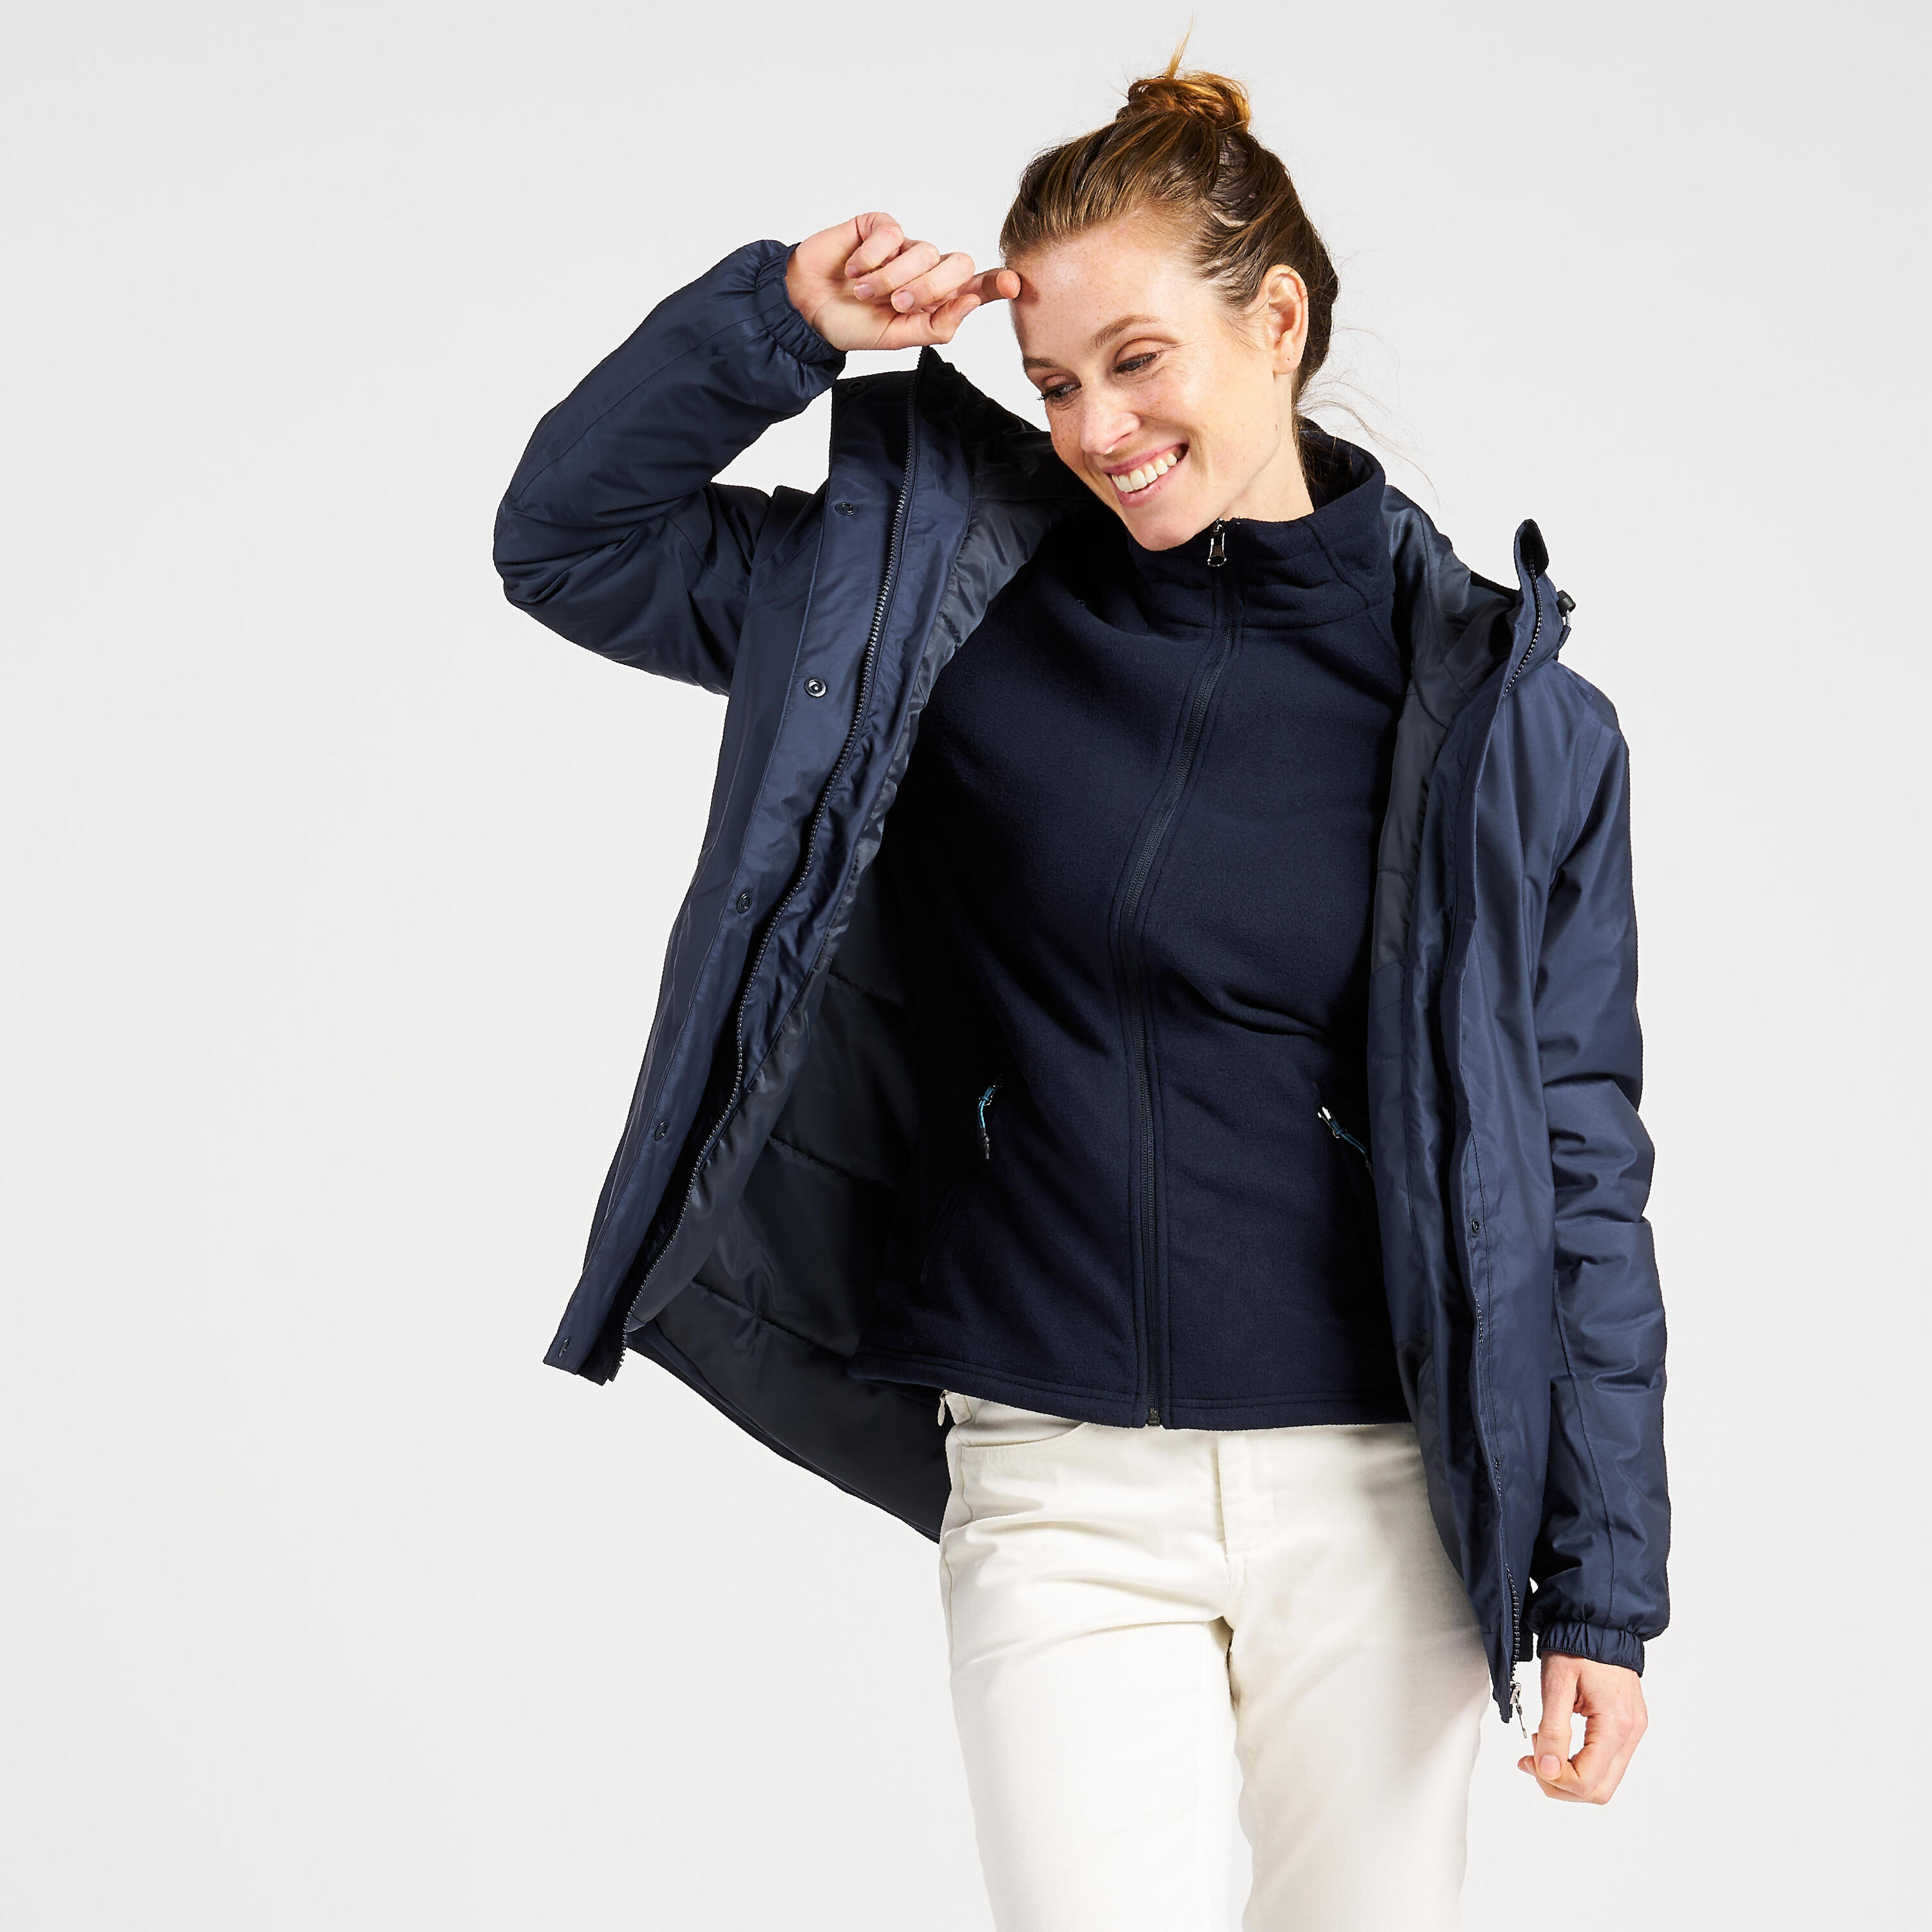 Women's warm waterproof sailing and rain jacket SAILING 100 blue 5/10